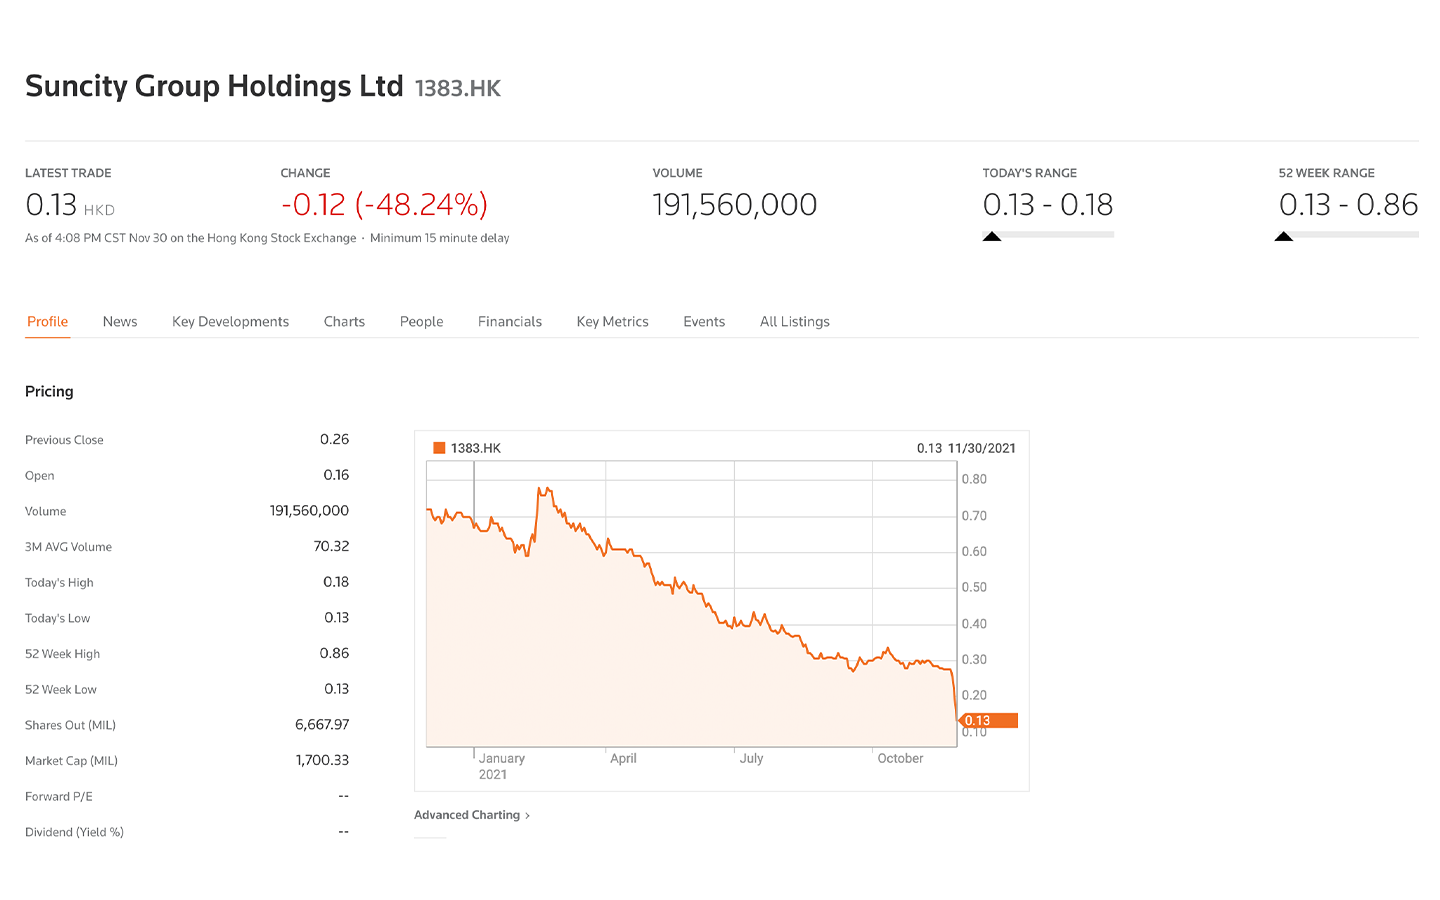 Suncity Group Holdings’ shares crash to HK$0.13